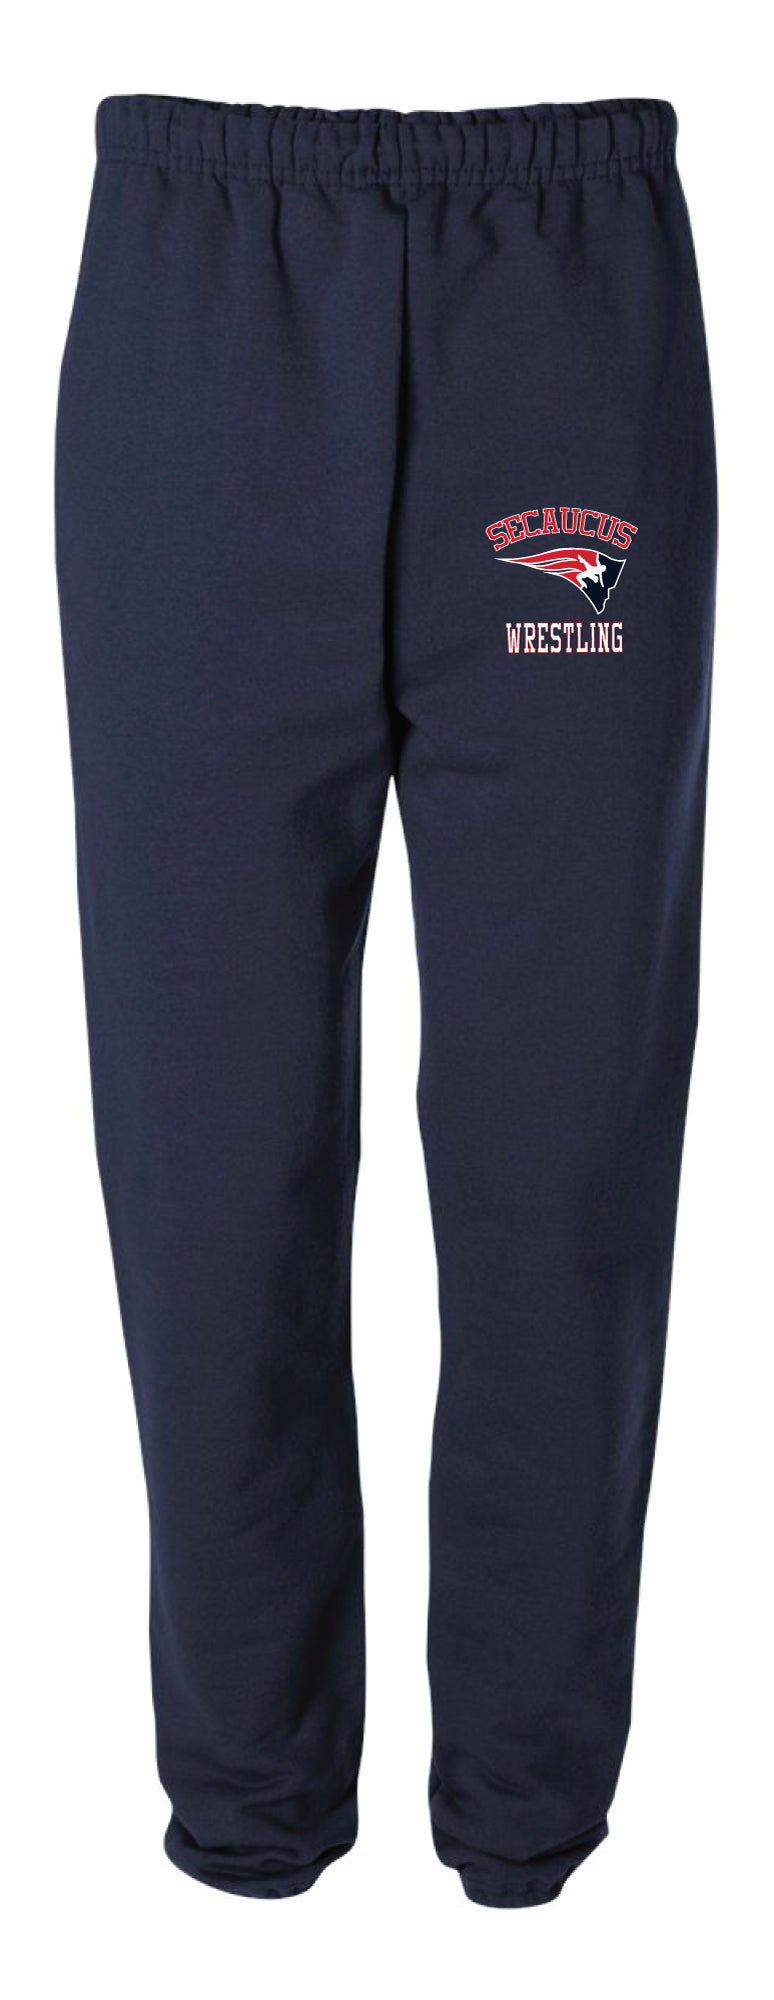 Secaucus Wrestling Cotton Sweatpants - Navy - 5KounT2018